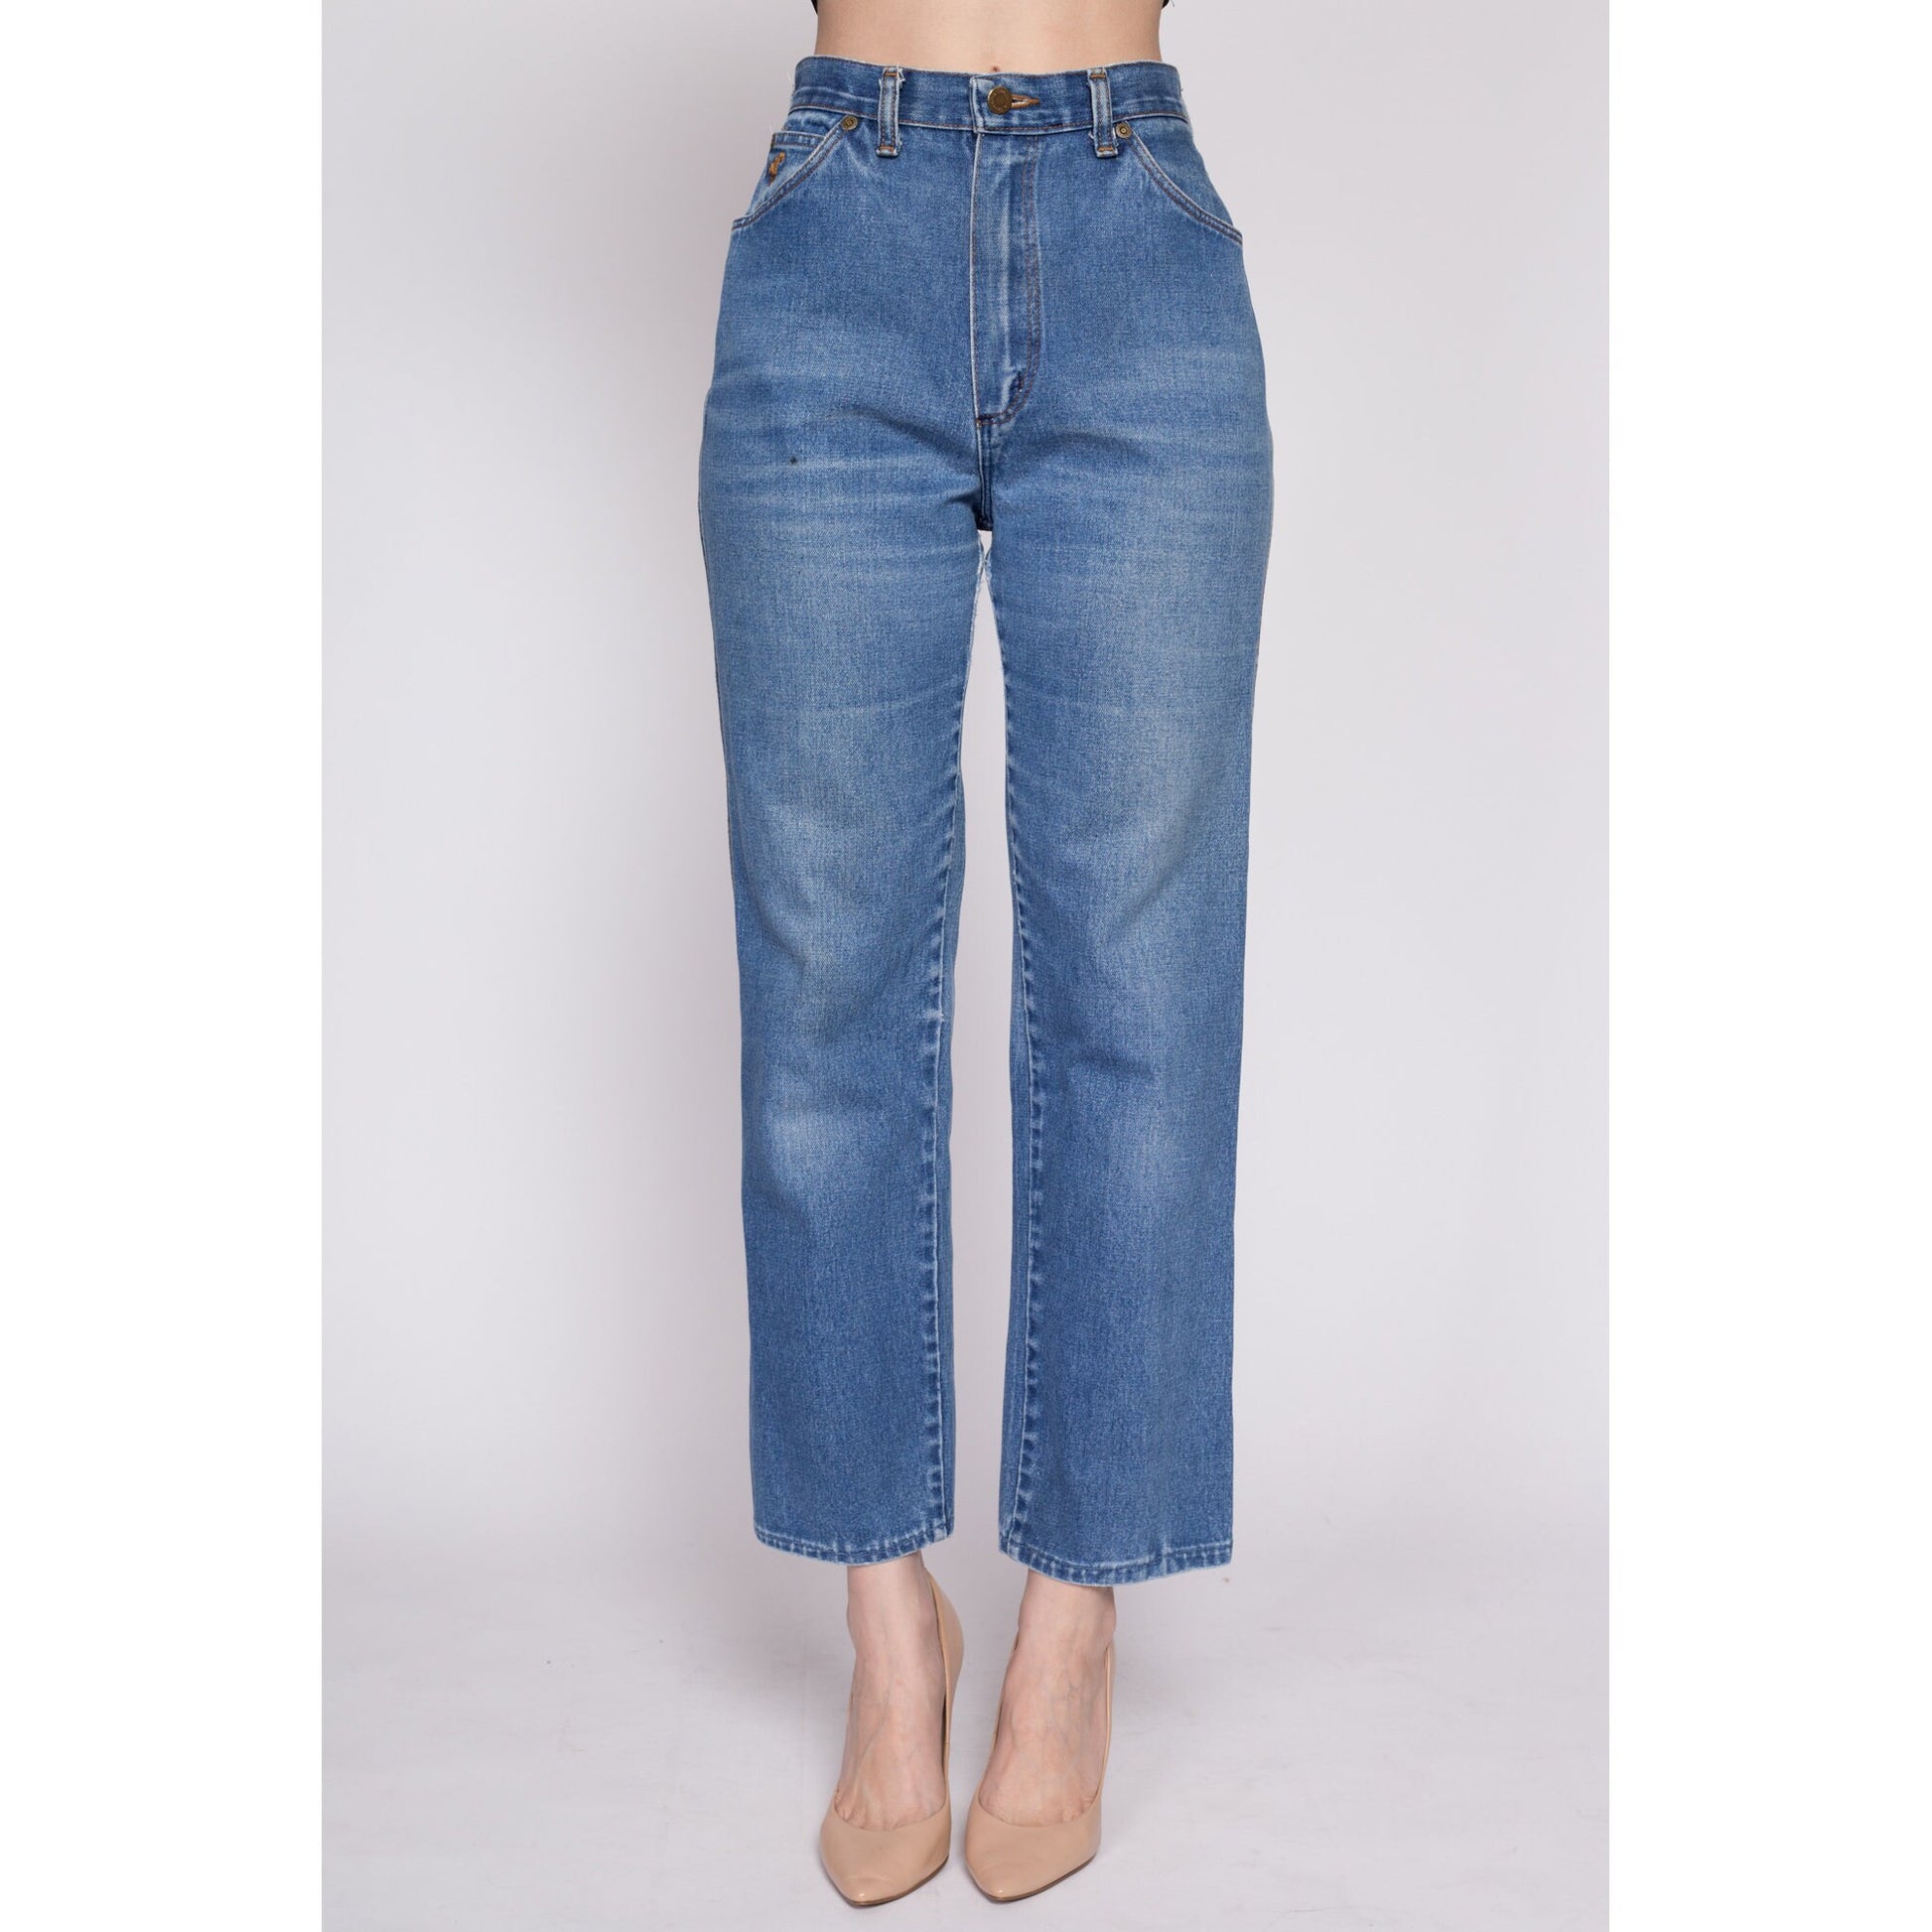 Small 70s Wrangler High Waisted Jeans 26" | Vintage Straight Leg Soft Denim Mom Jeans